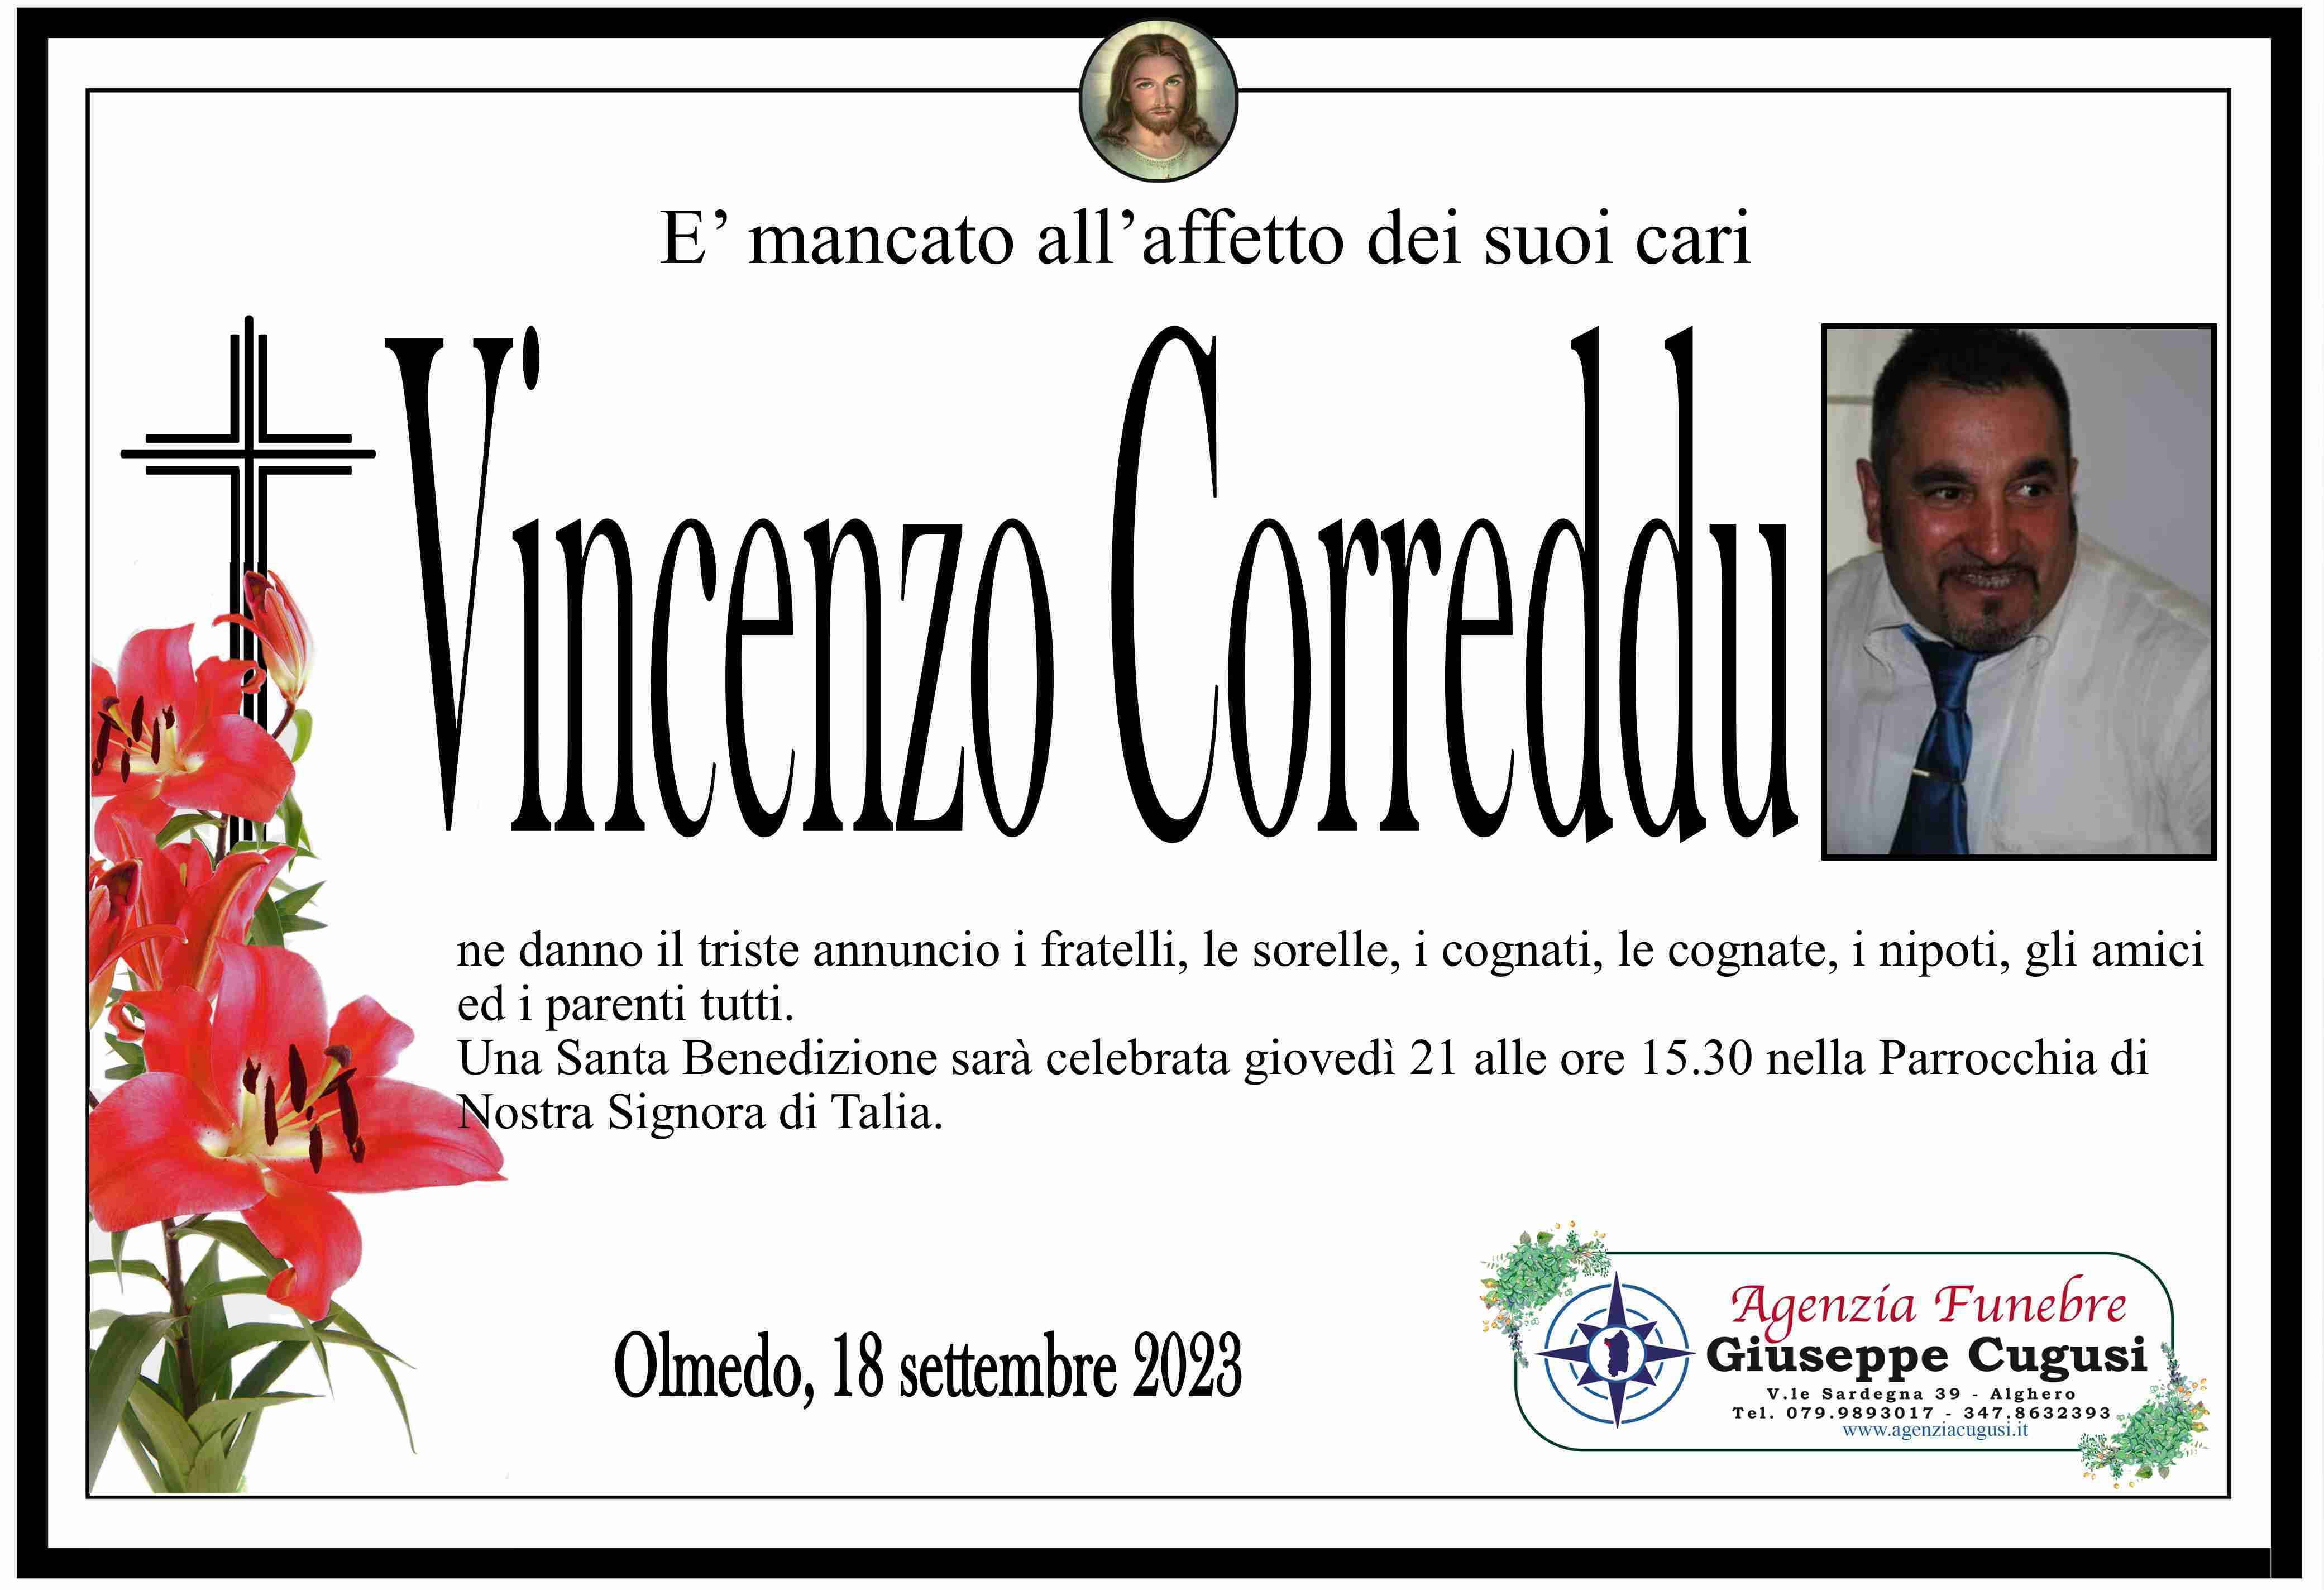 Vincenzo Correddu